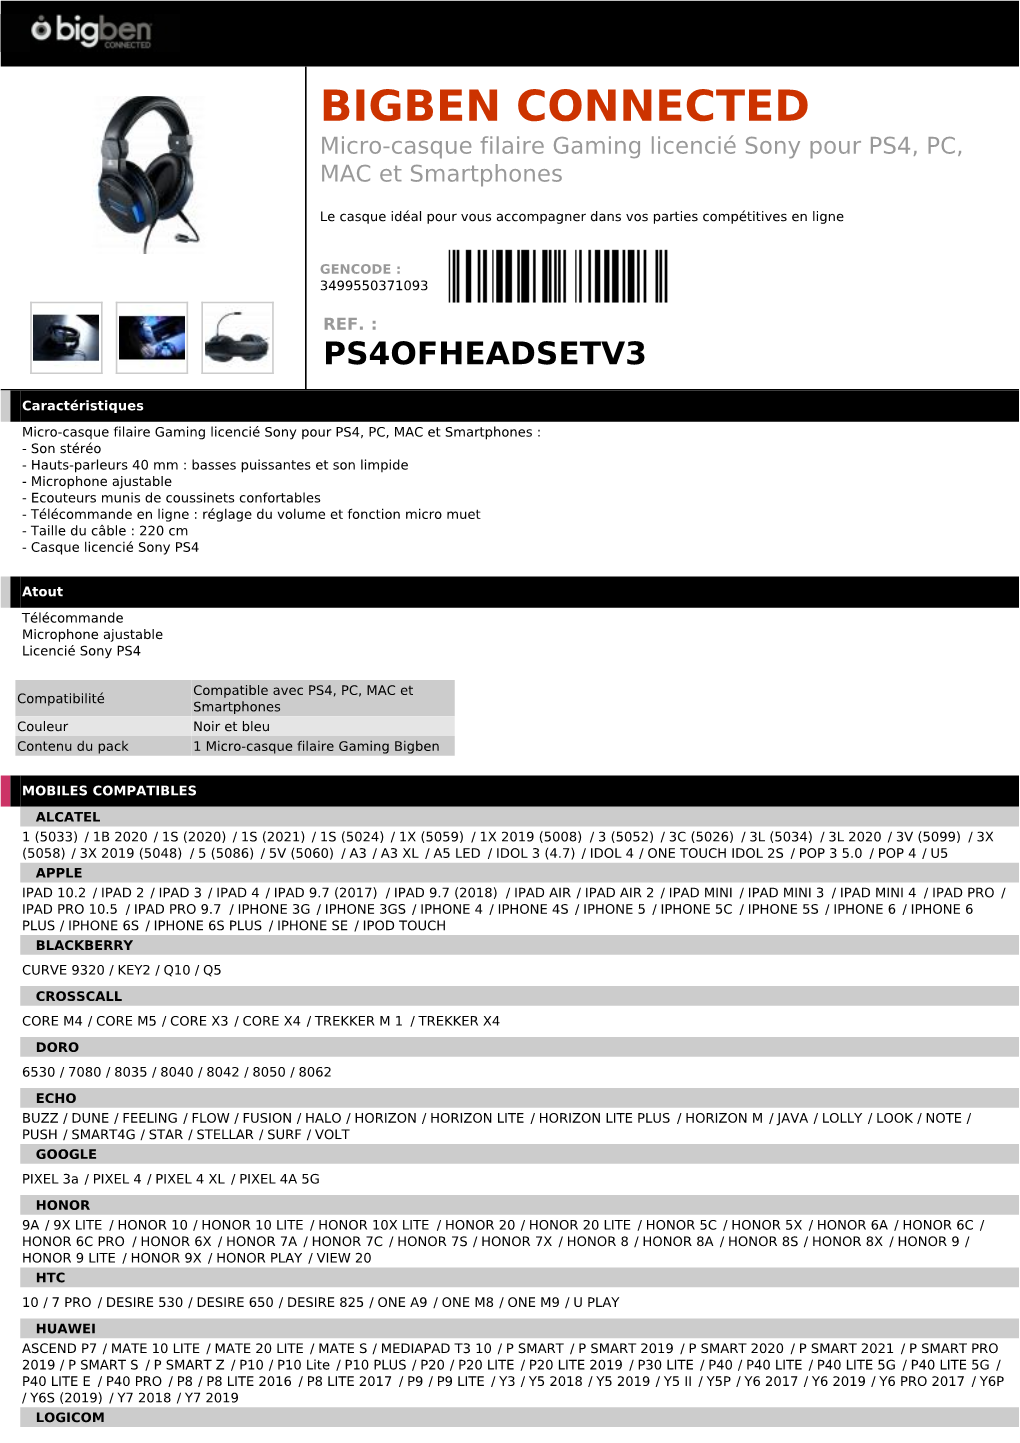 BIGBEN CONNECTED Micro-Casque Filaire Gaming Licencié Sony Pour PS4, PC, MAC Et Smartphones